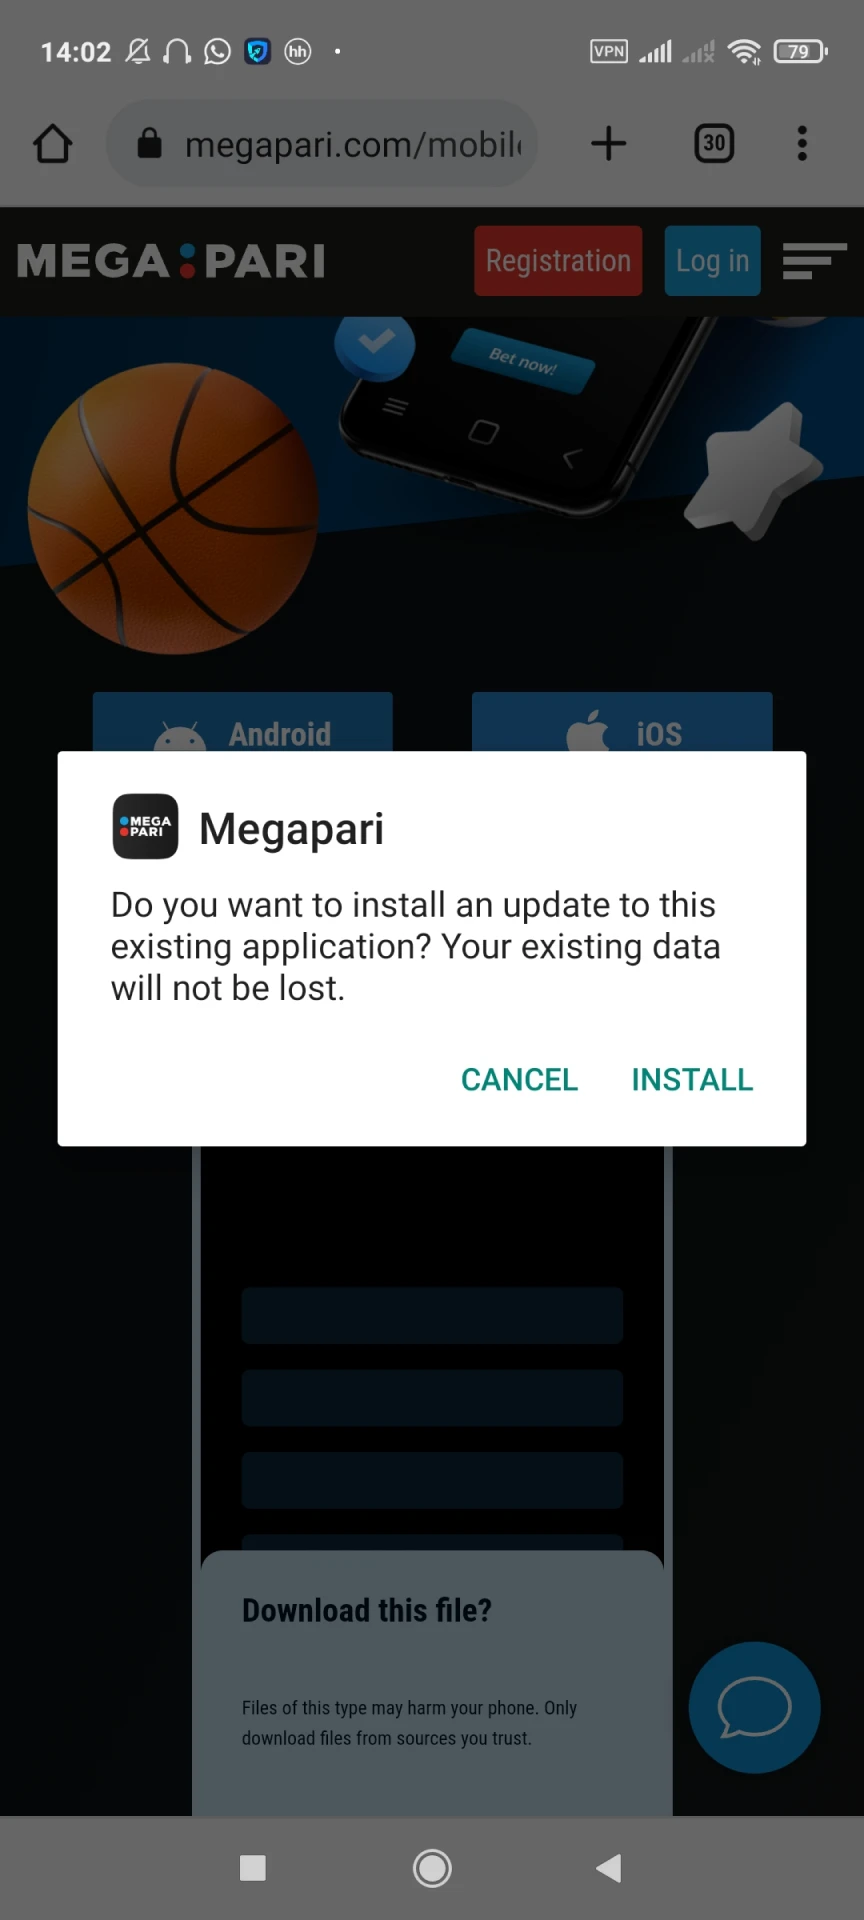 Prossiga para instalar o aplicativo Megapari para Android.